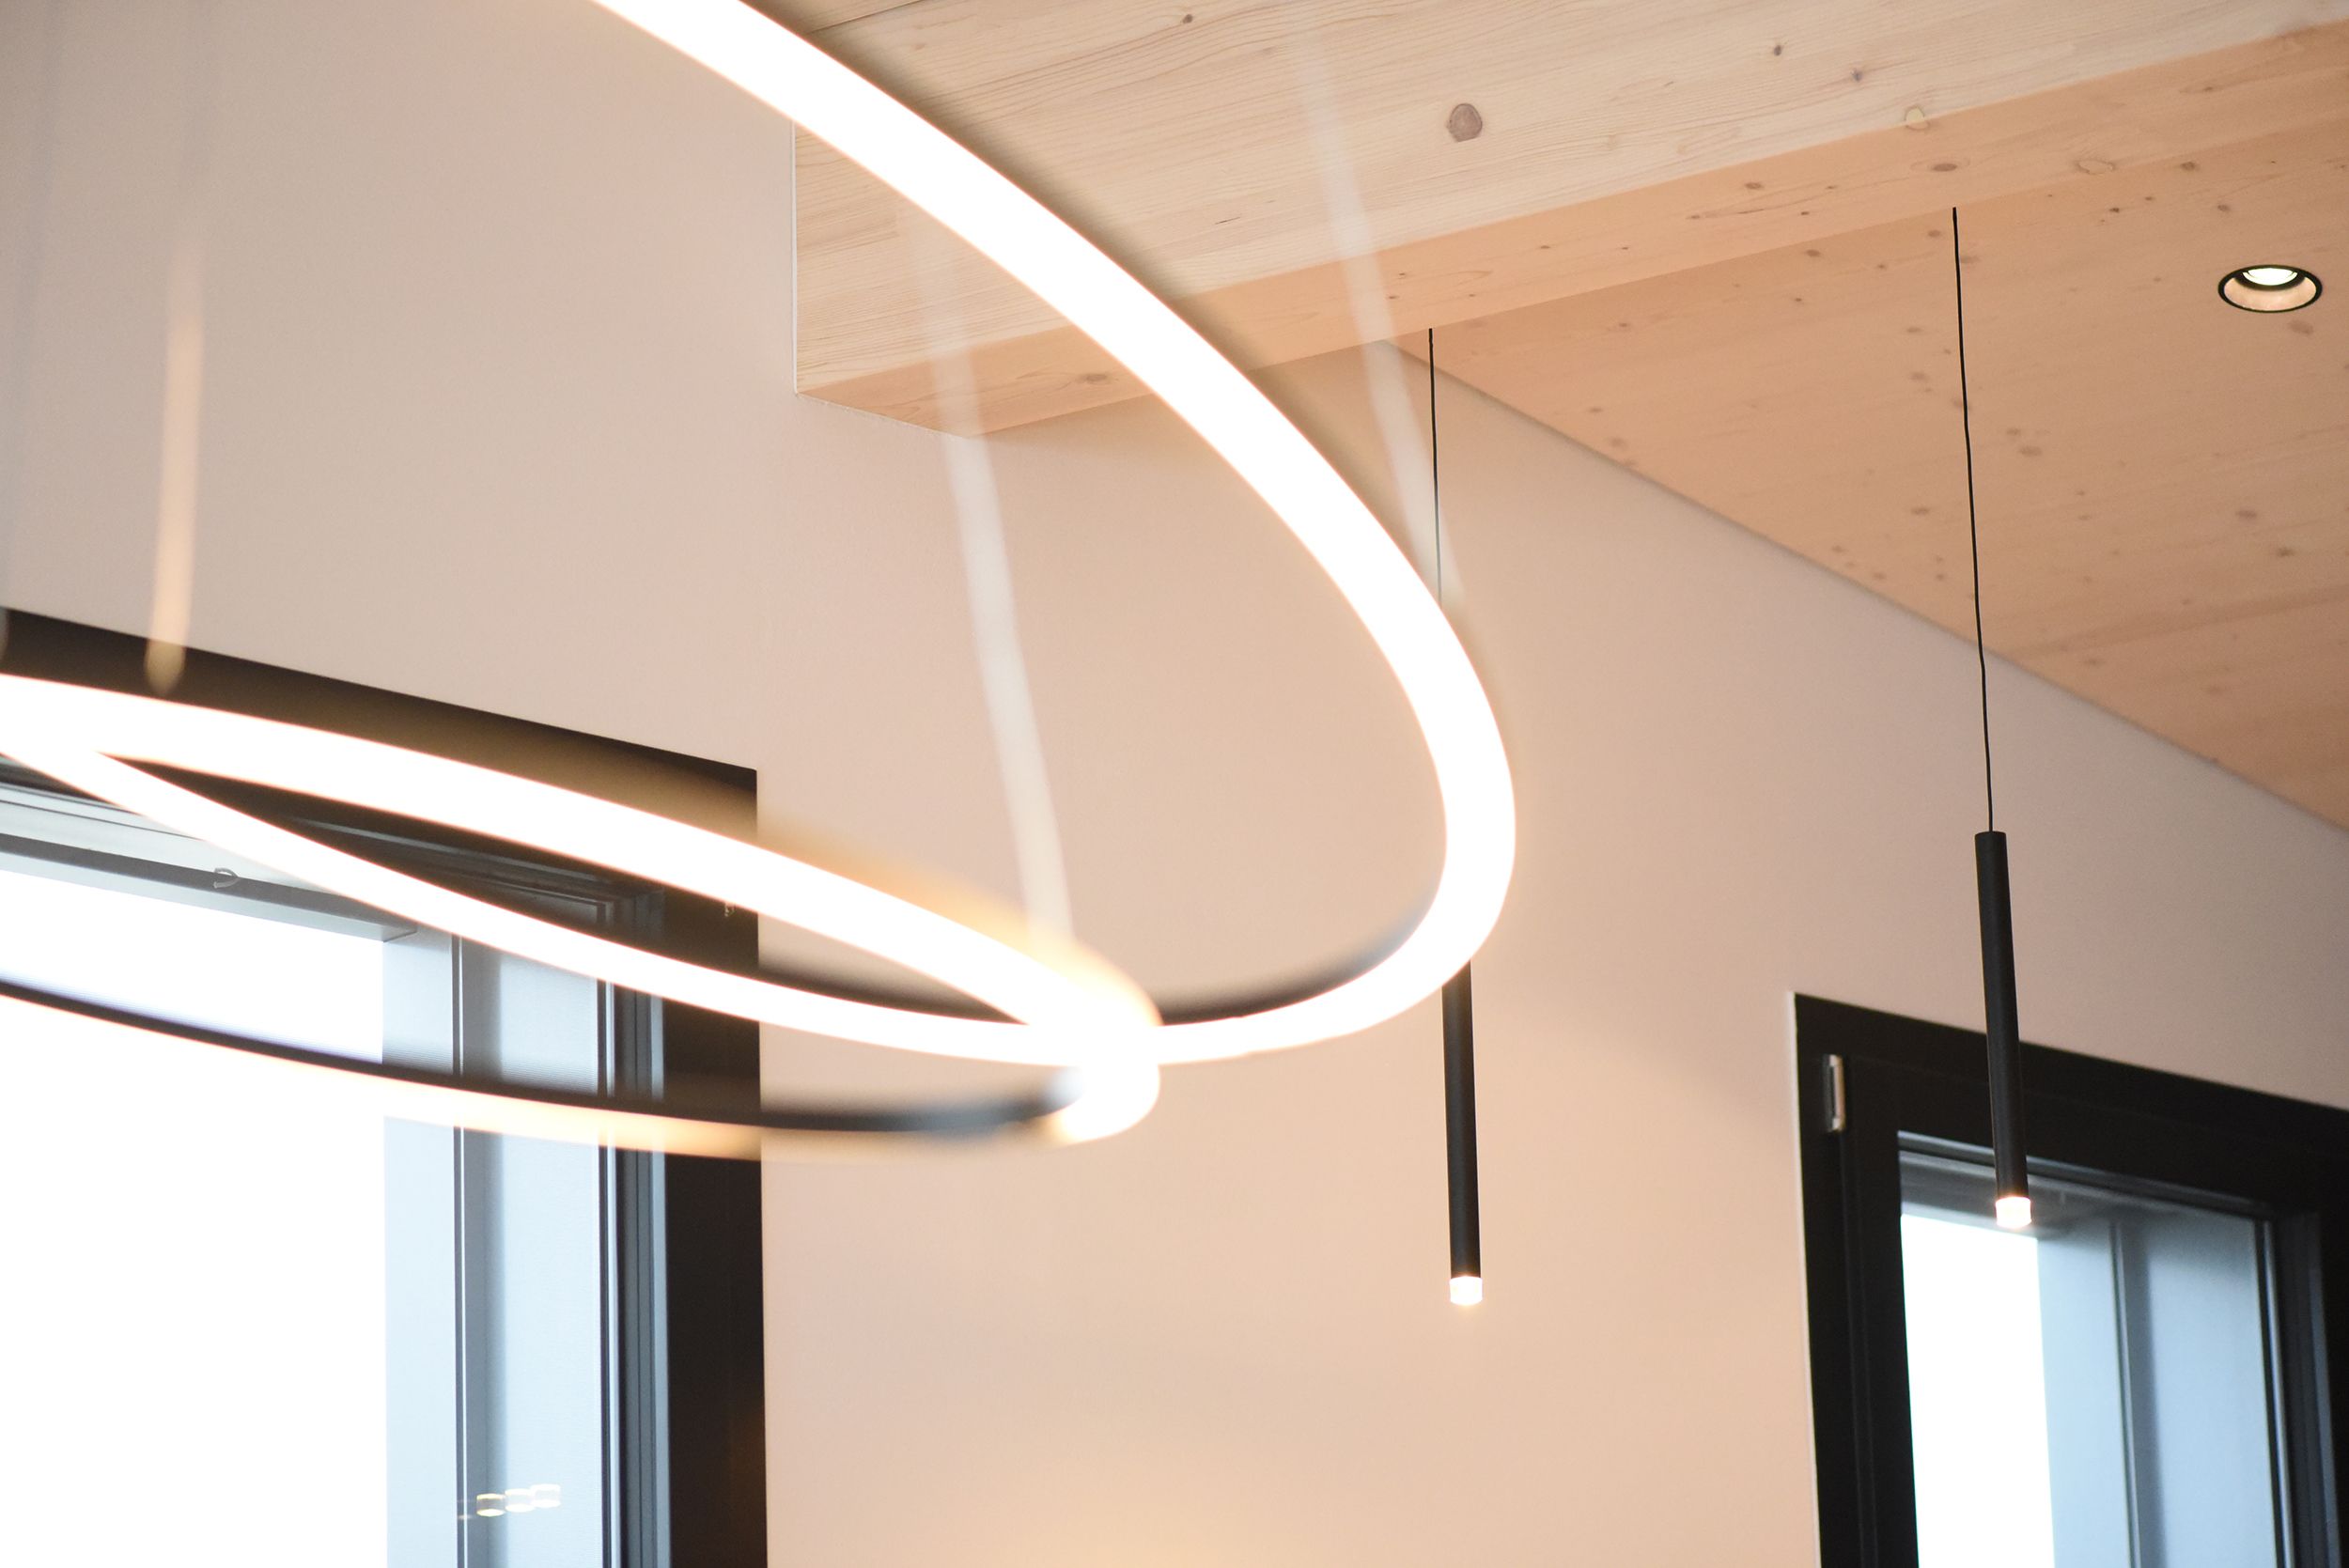 mehr concepts AG Impressions detail high-quality interior architecture design concept light concept